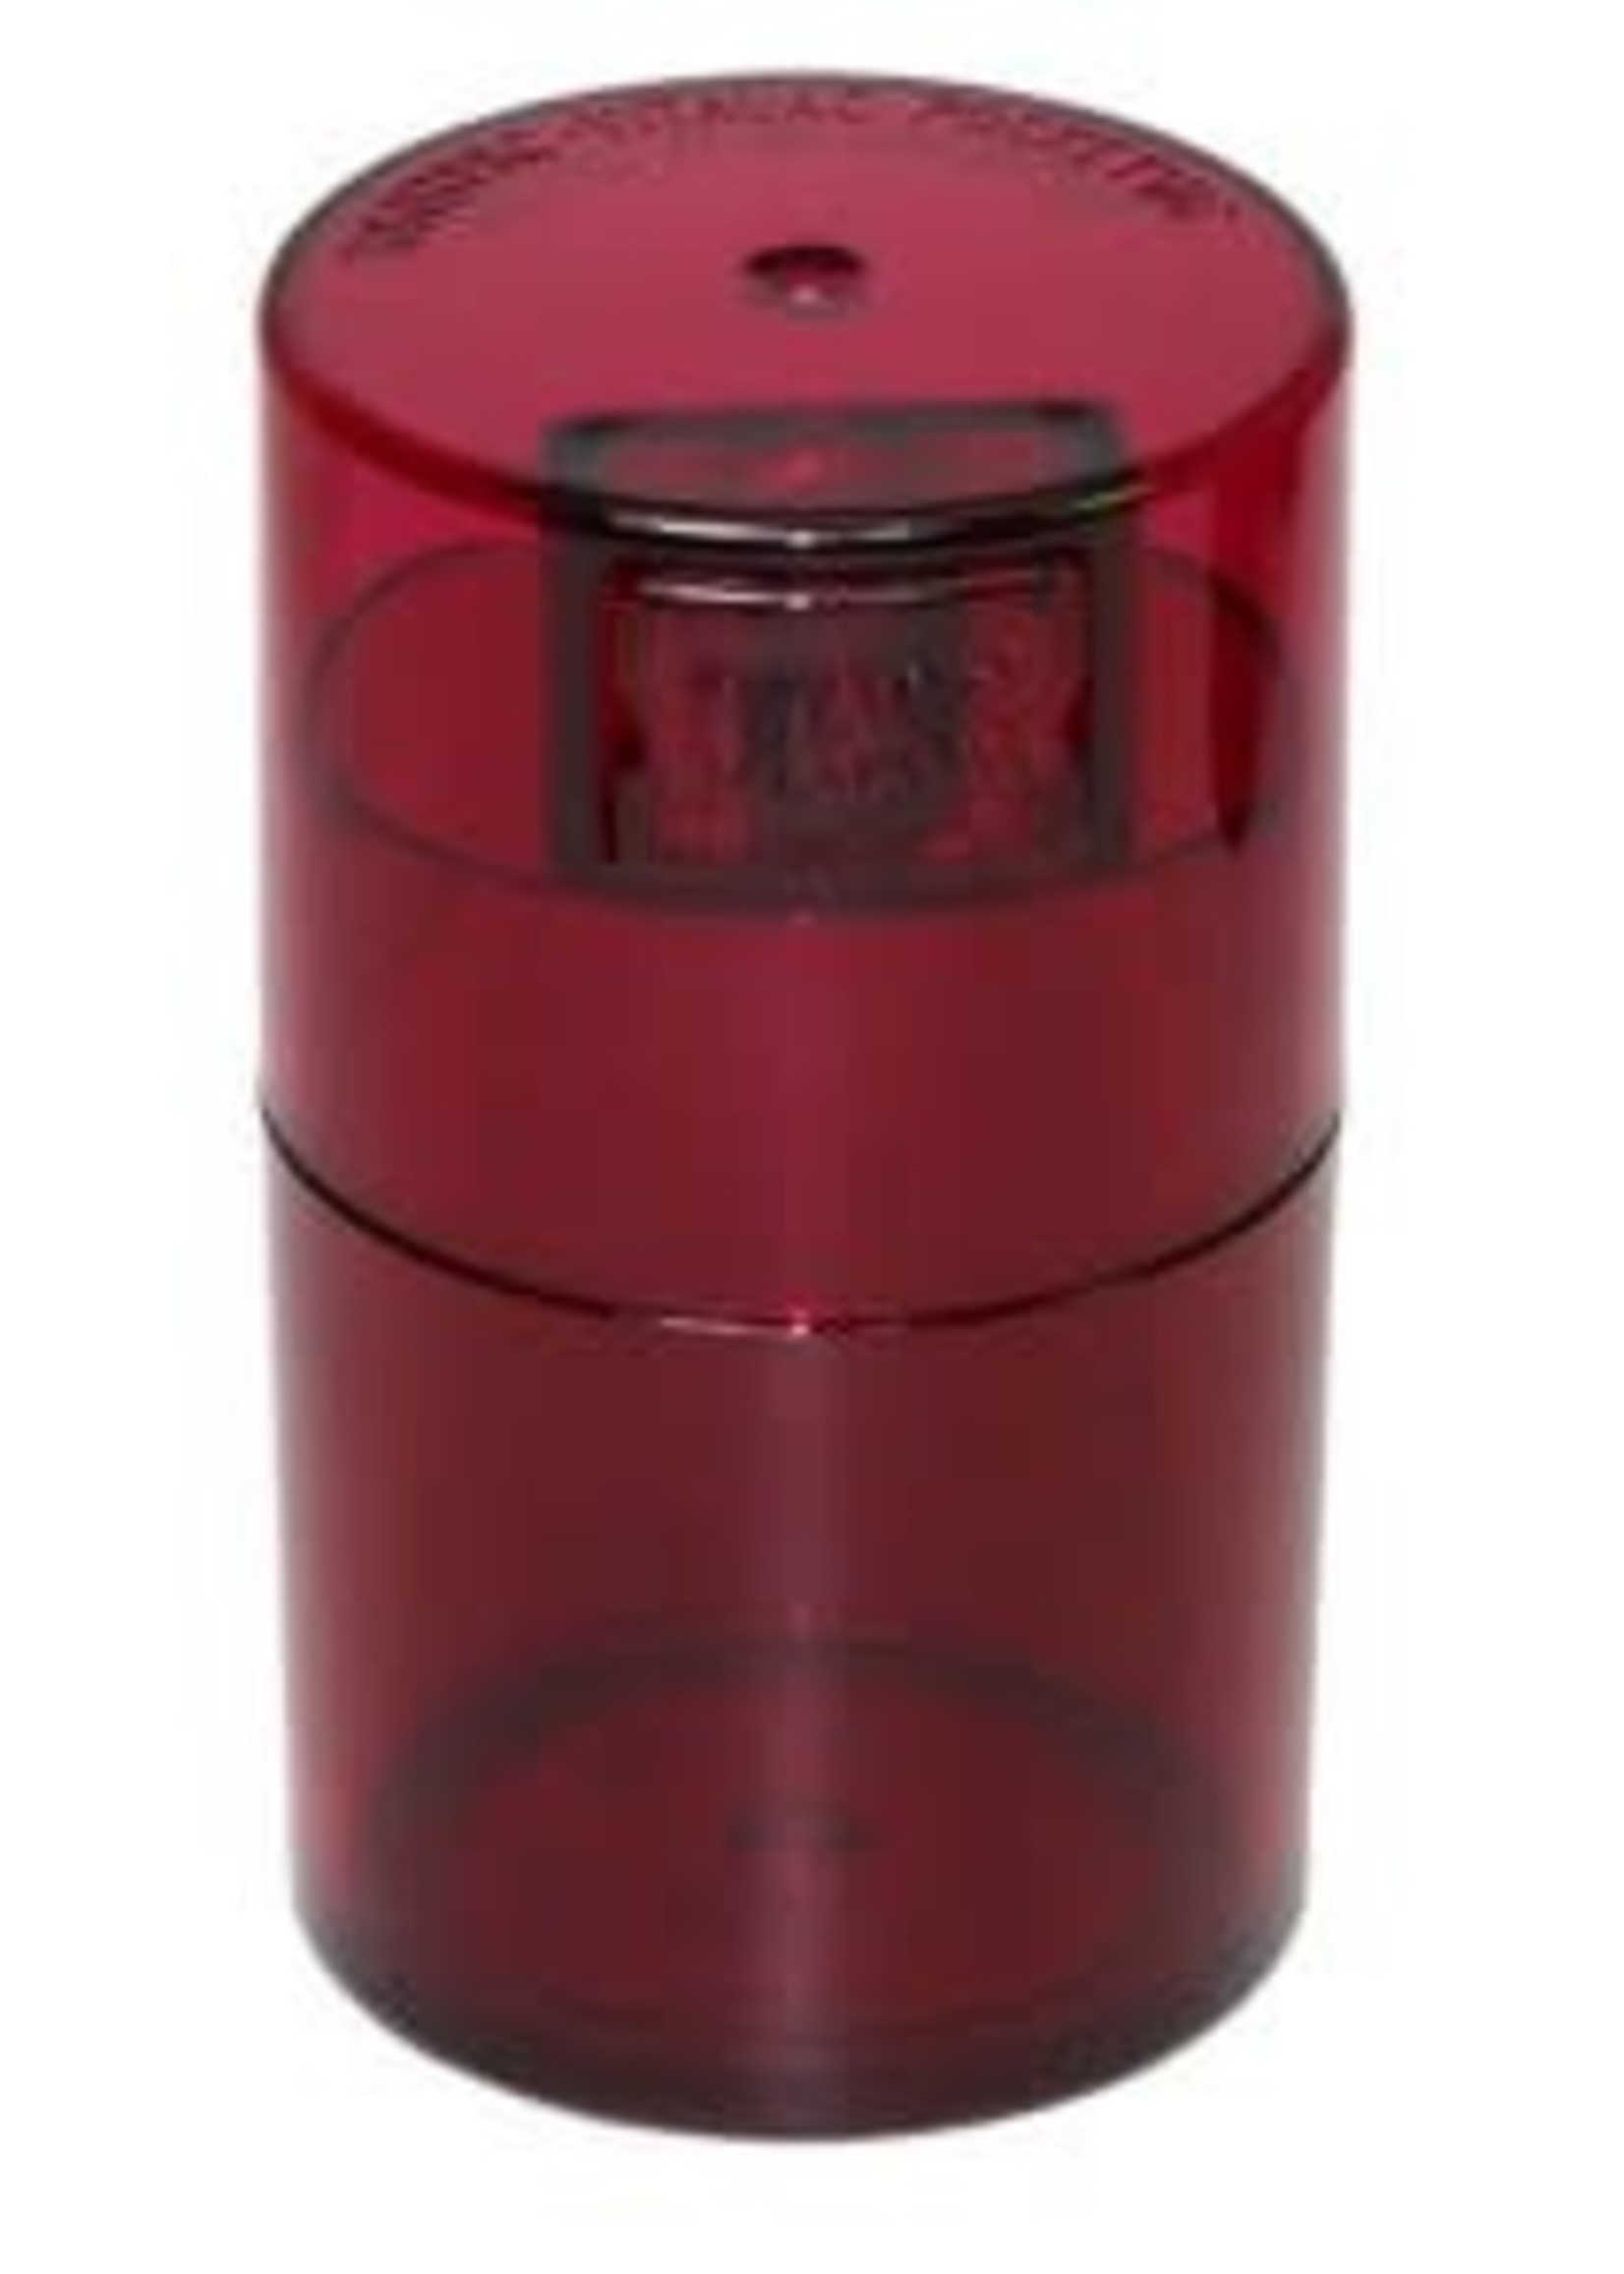 Vitavac 0.06 liter Red Tint Cap/Red Tint Body